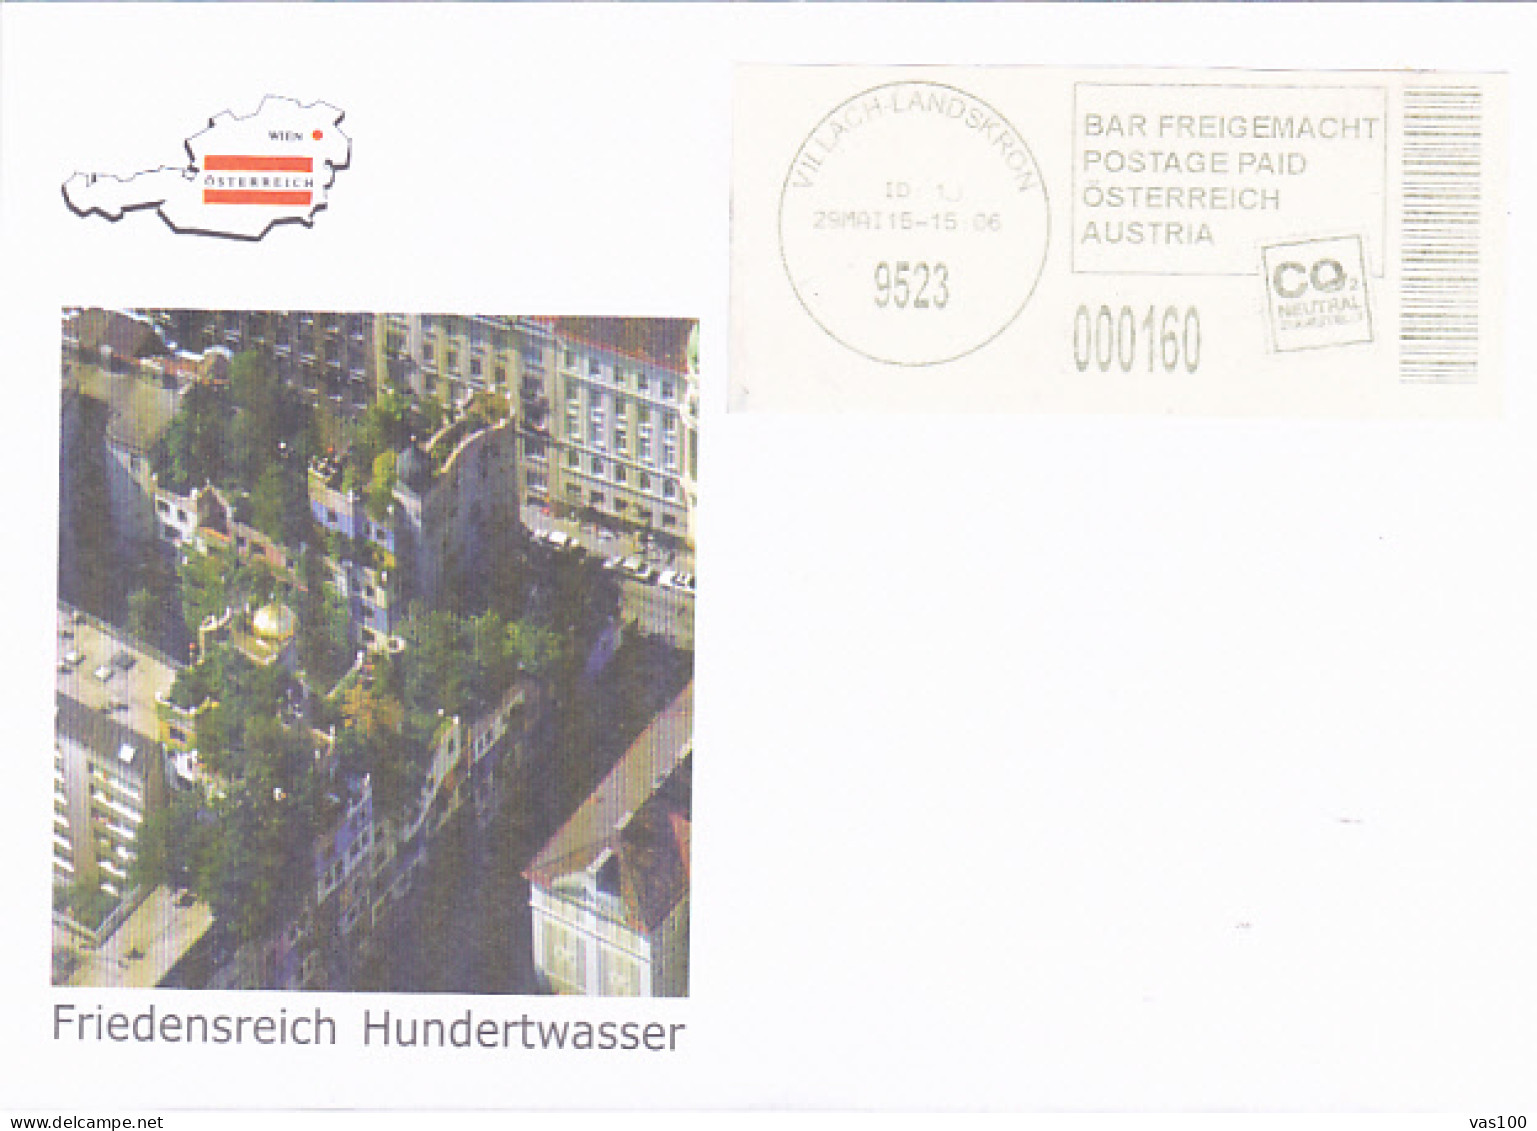 FRIEDENSREICH HUNDERTWASSER, ARCHITECT, POSTAGE PAID SPECIAL COVER, 2015, AUSTRIA - Storia Postale